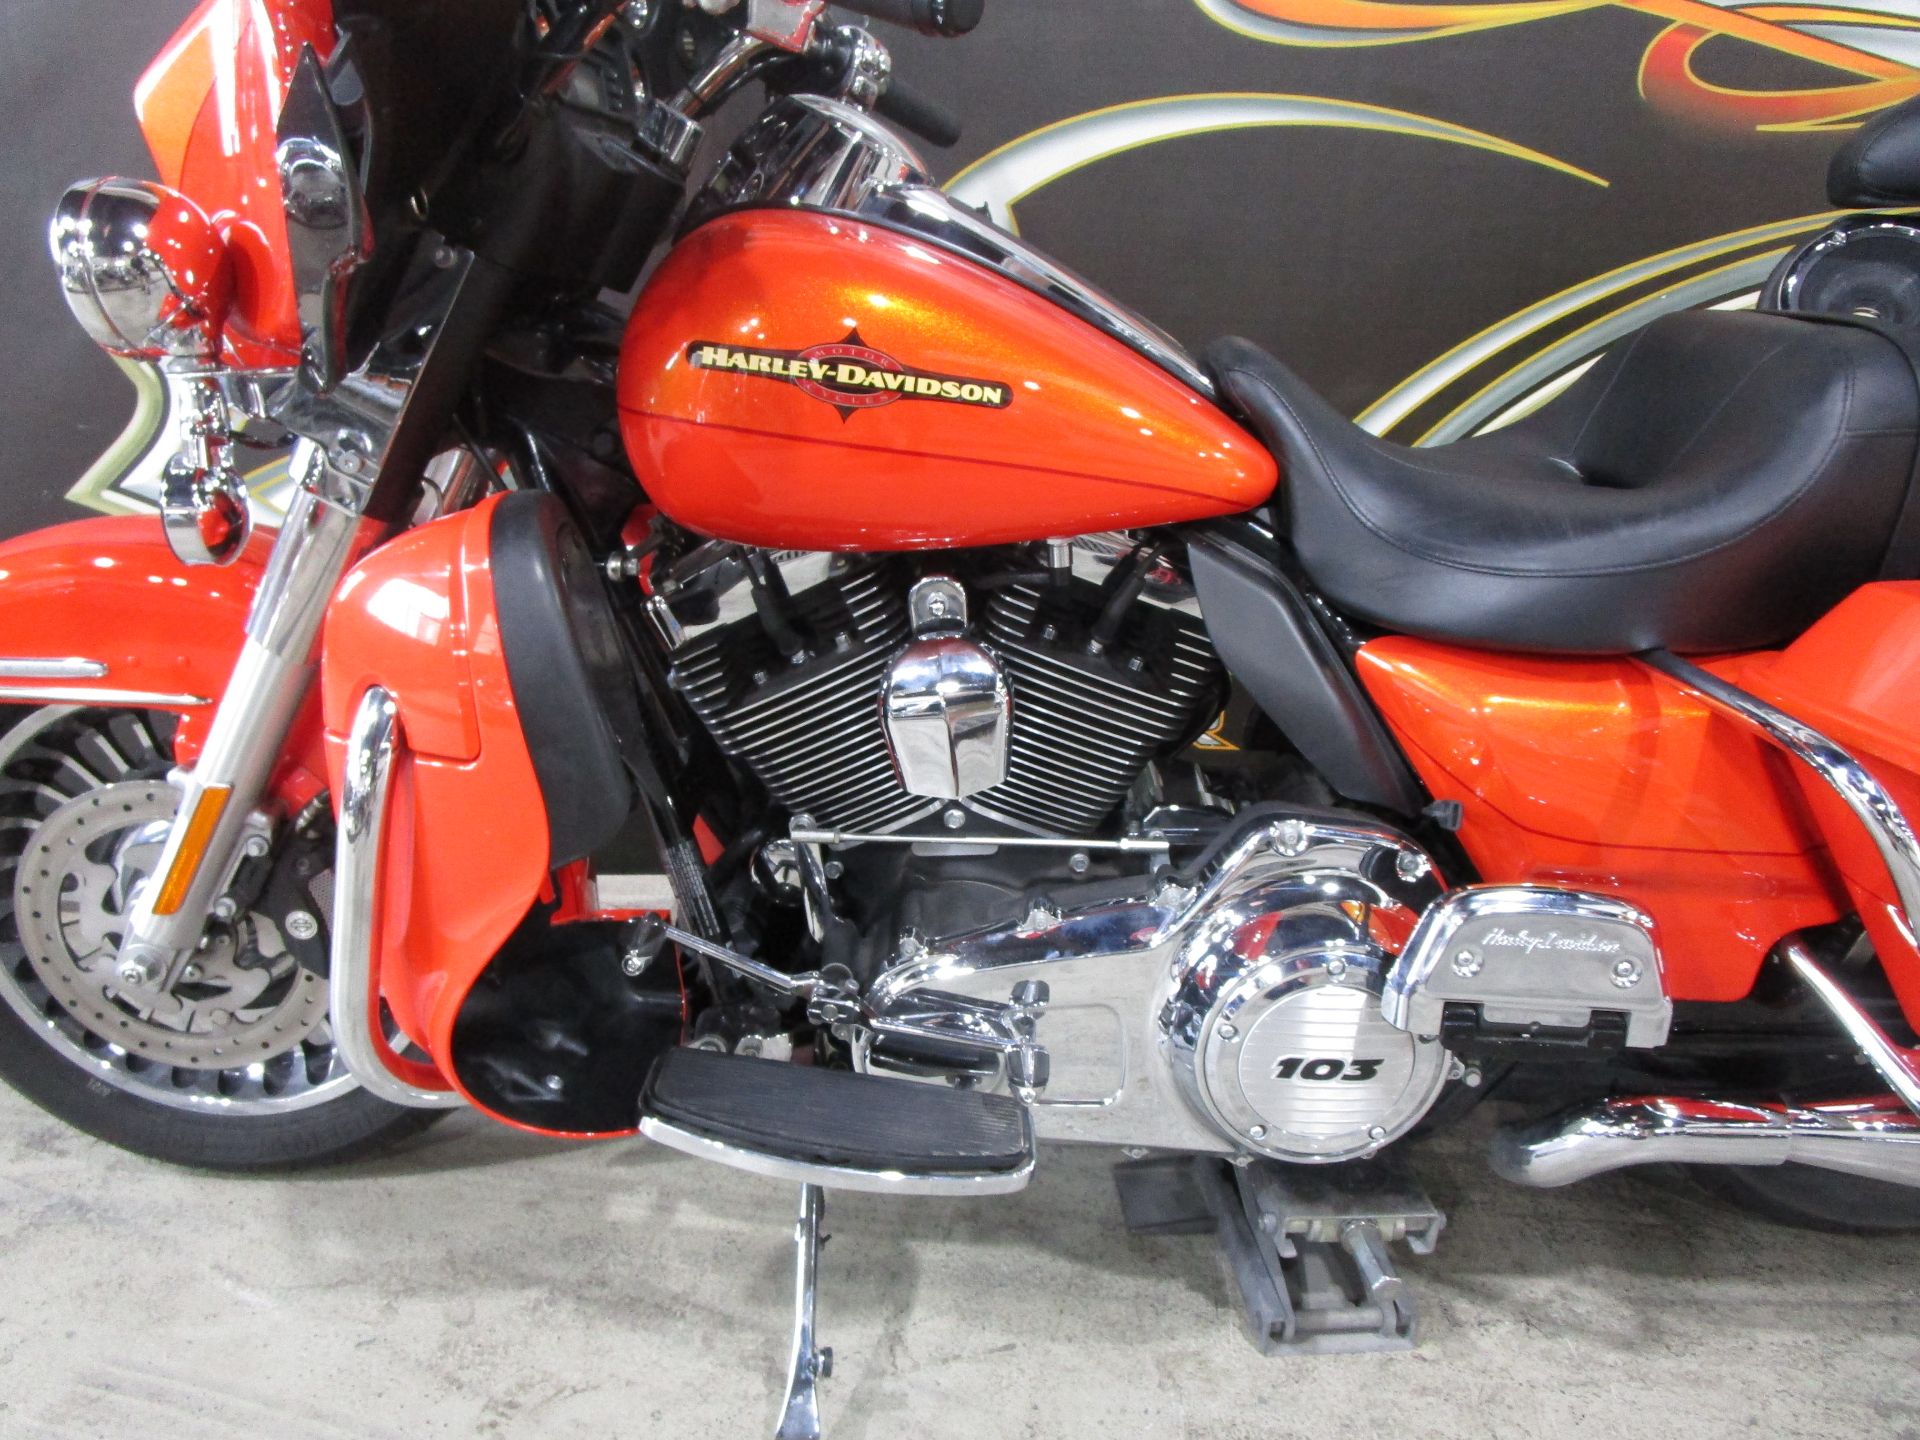 2012 Harley-Davidson Electra Glide® Ultra Limited in South Saint Paul, Minnesota - Photo 16